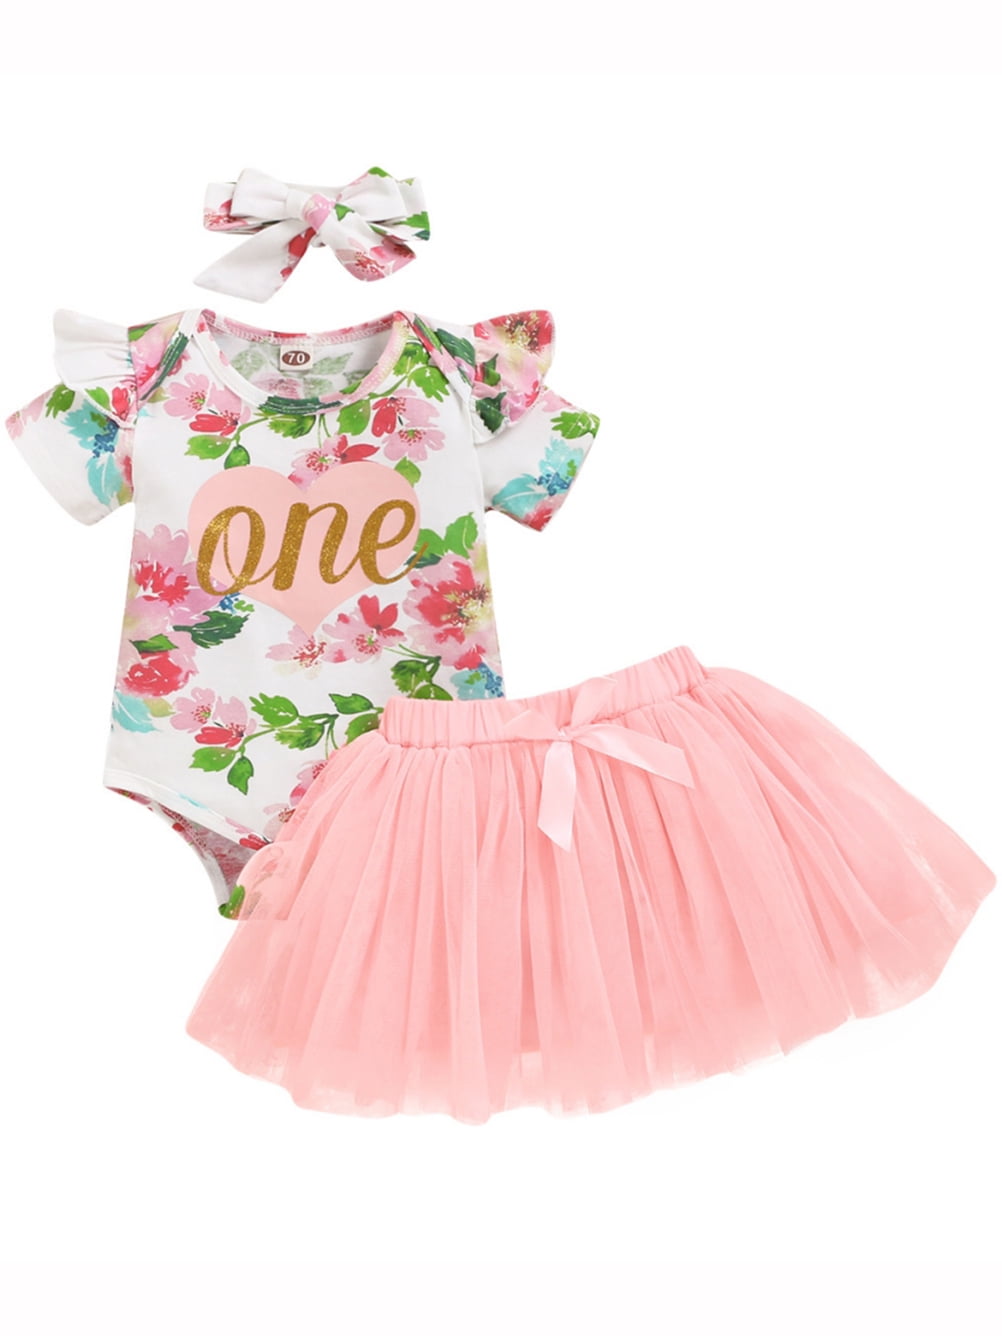 Baby Girl 1st Birthday Cake Smash Party Outfit Tutu Dress Disney Minnie 12M UK 